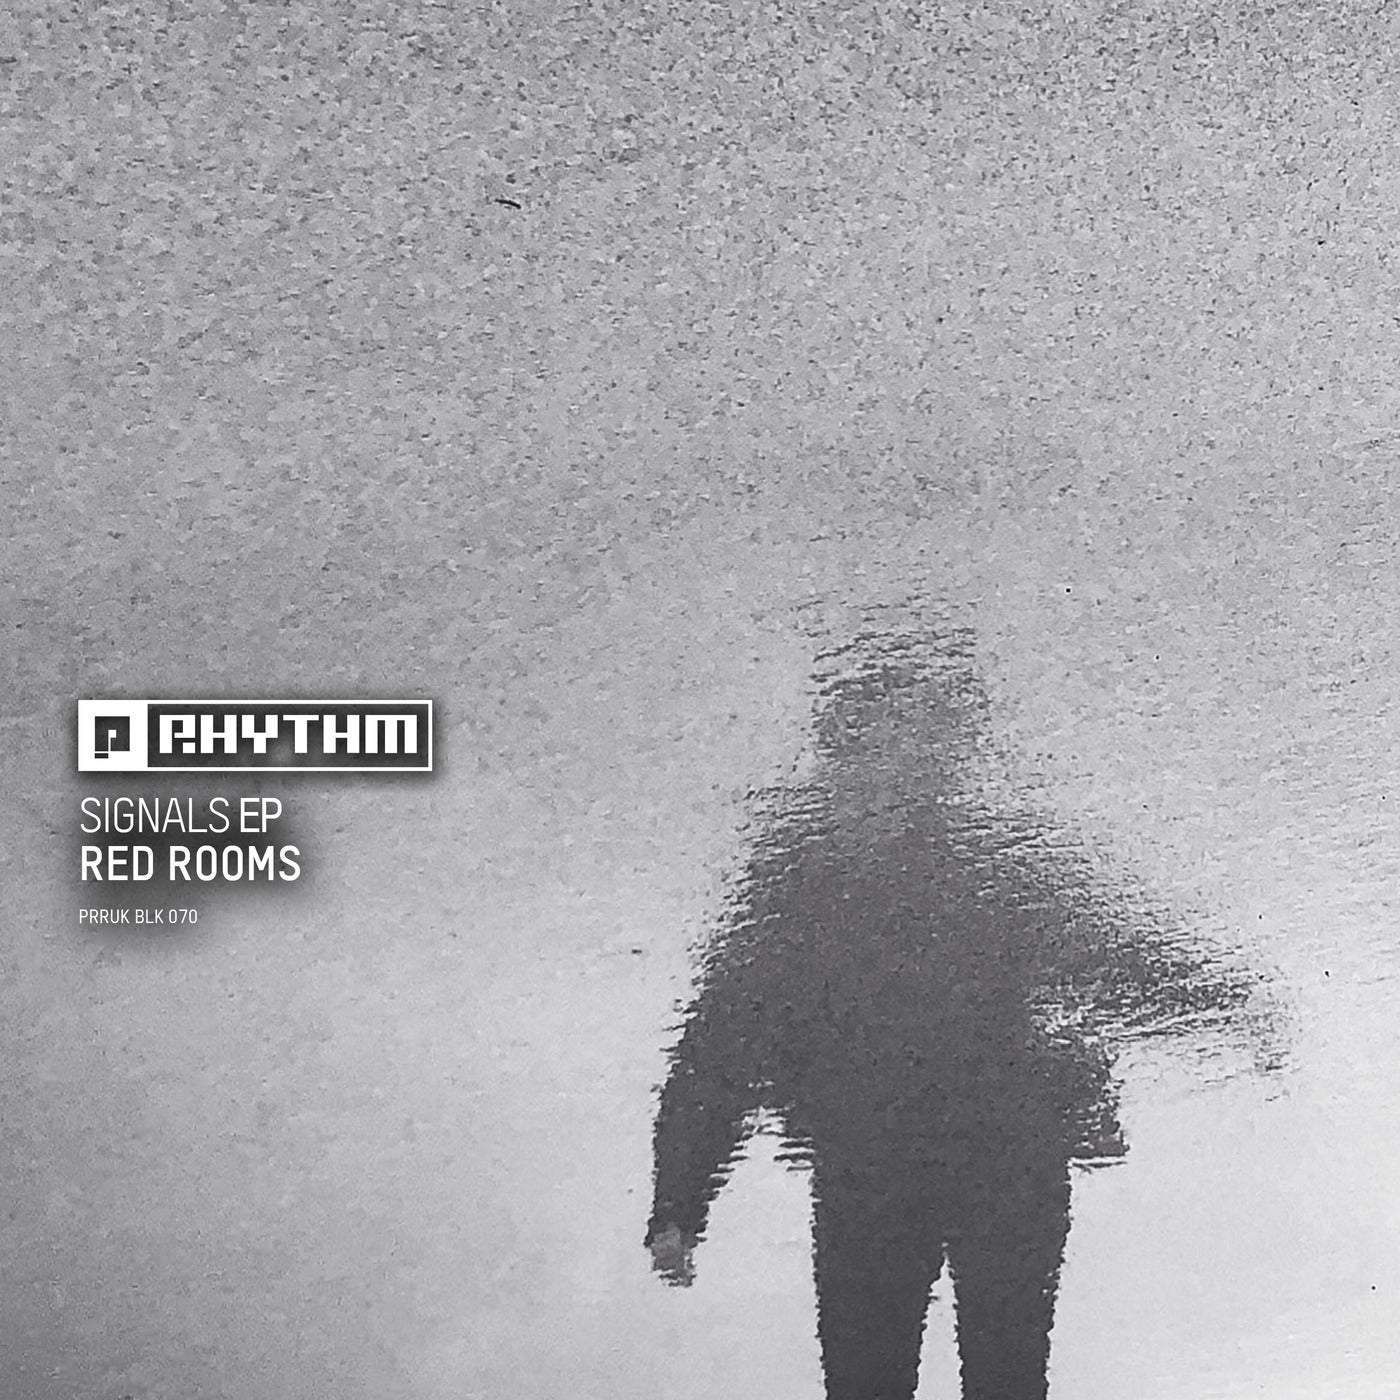 image cover: Red Rooms, Georg Fischer - Signals EP / PRRUKBLK070